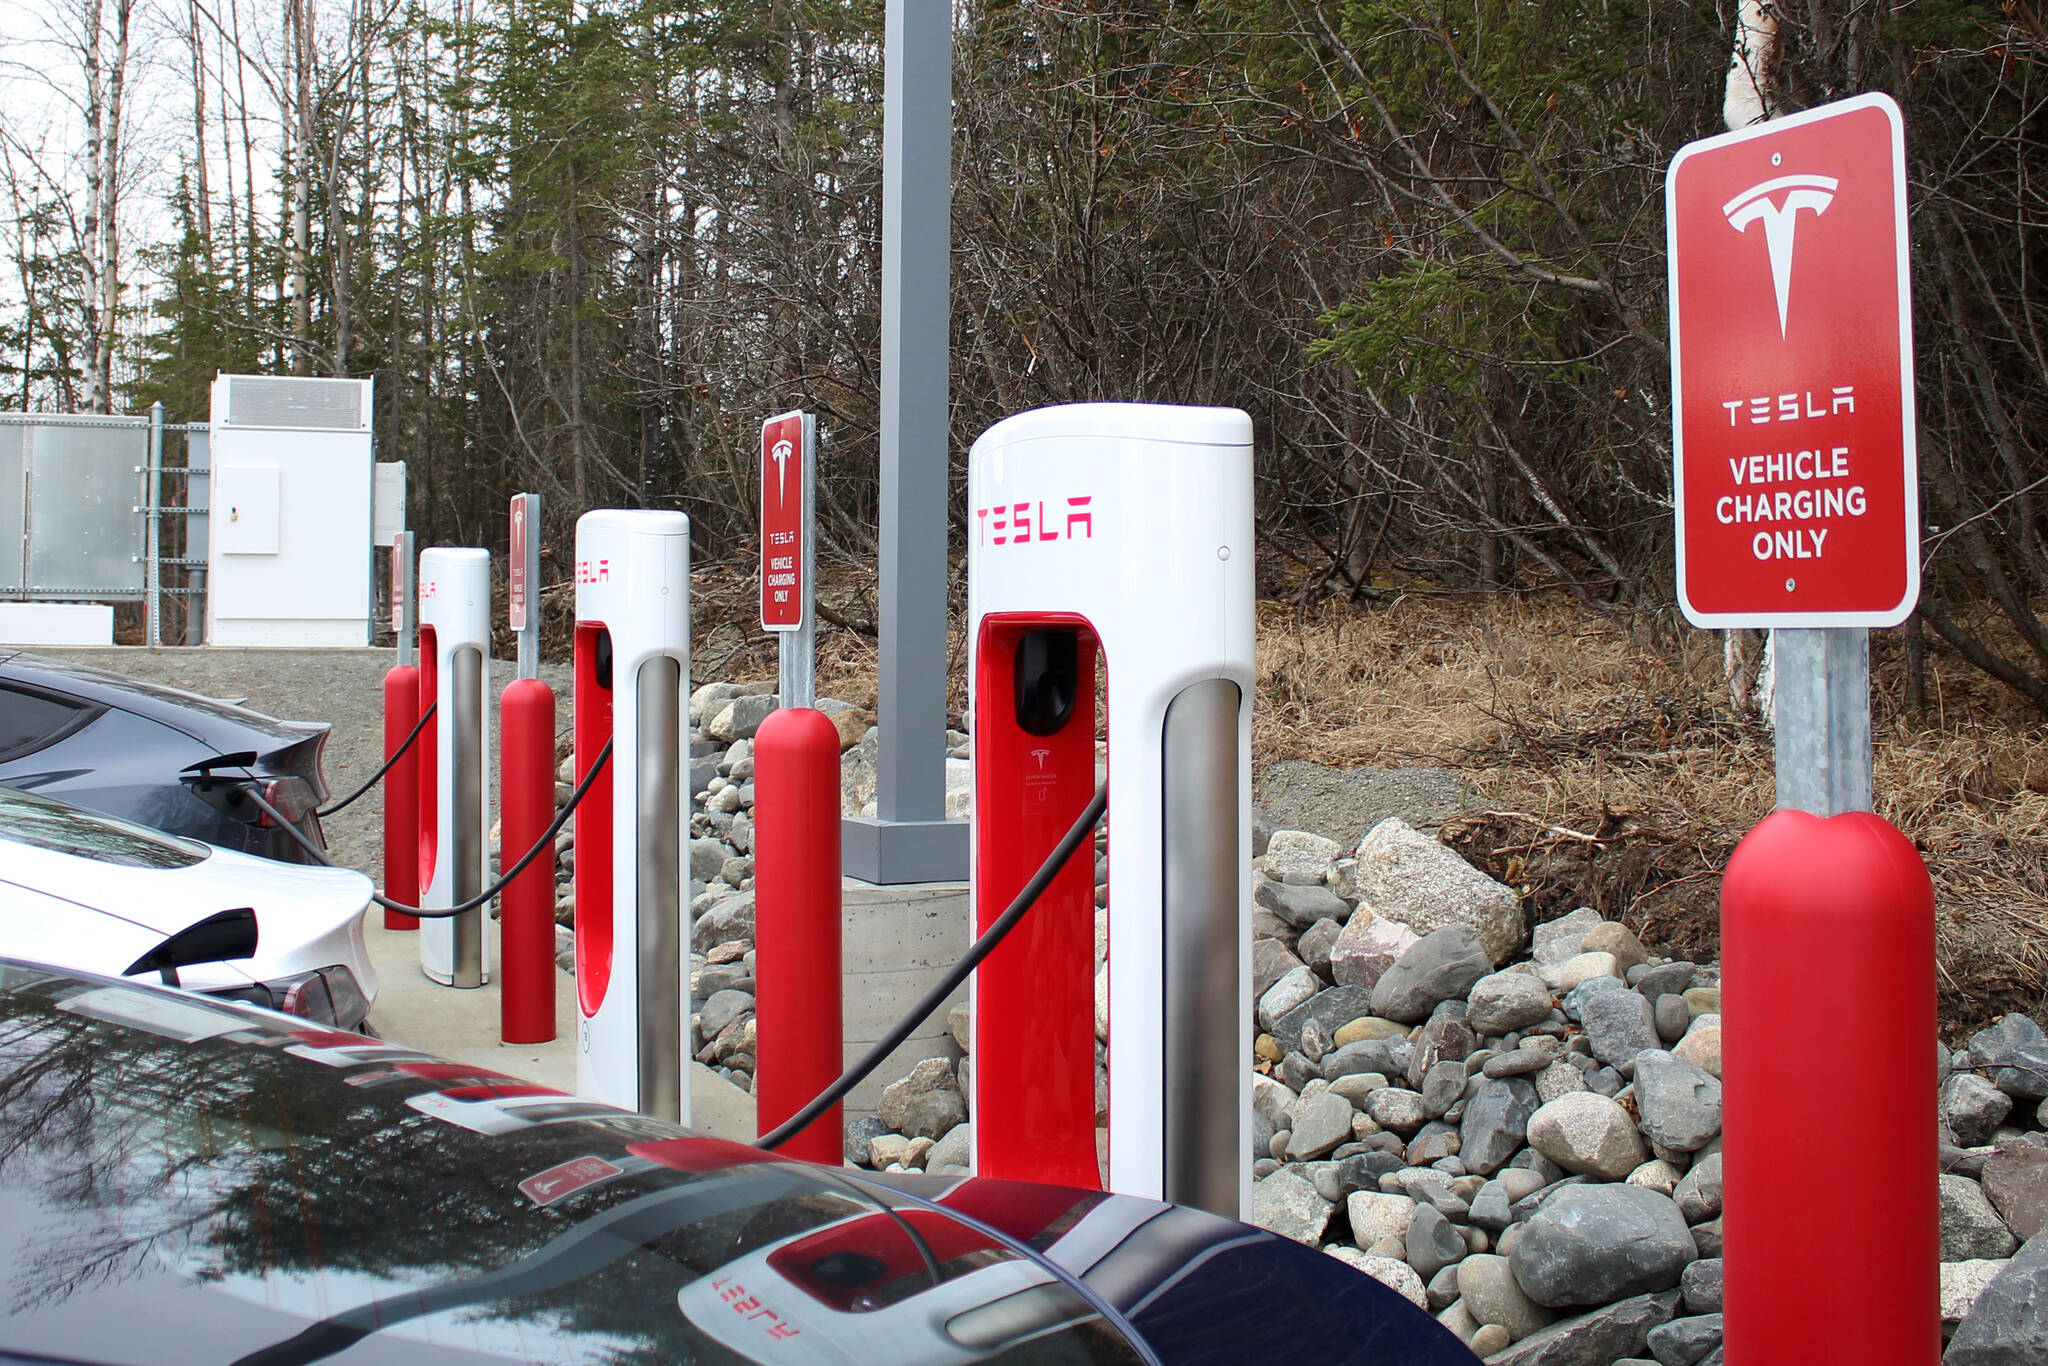 Teslas charge at Alaska’s first Tesla Supercharger station on Saturday, April 30, 2022, in Soldotna, Alaska. (Ashlyn O’Hara/Peninsula Clarion)